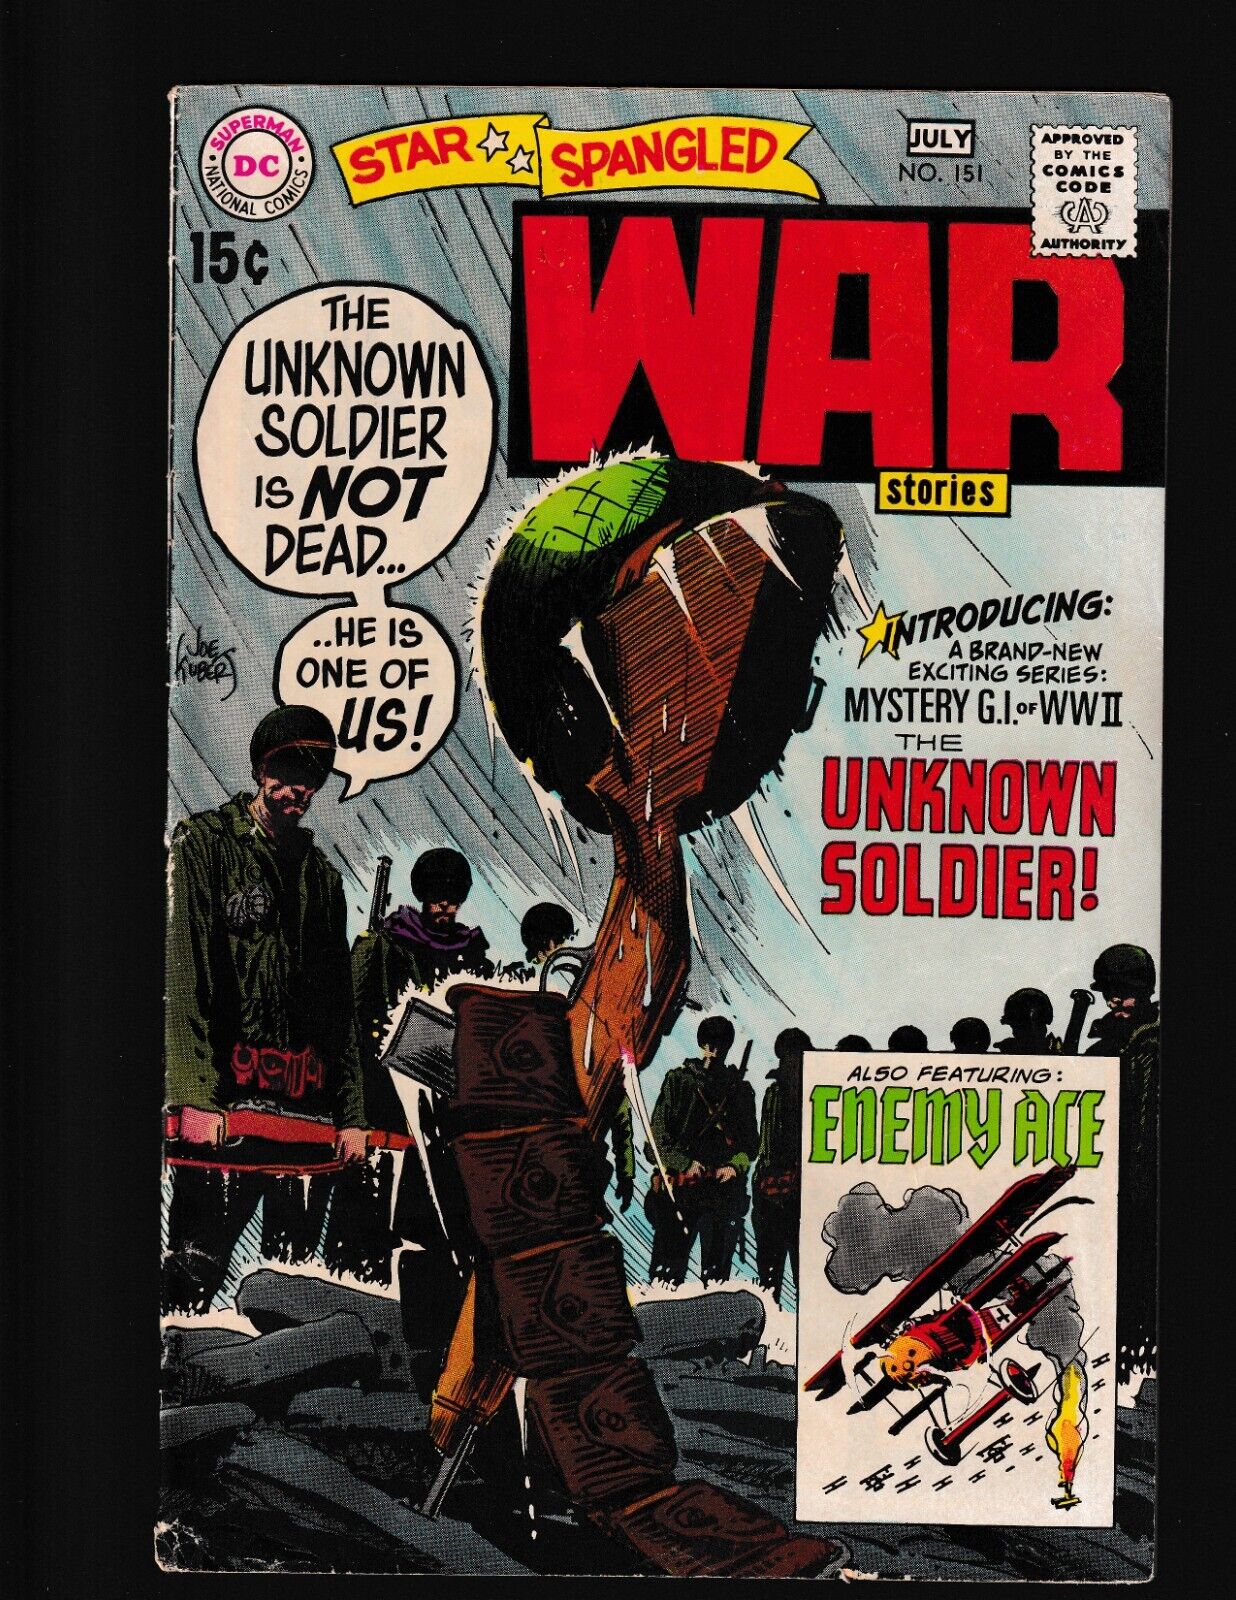 Star Spangled War Stories issue 151 July 1970, GD/VG, BRONZE AGE WAR COMICS 